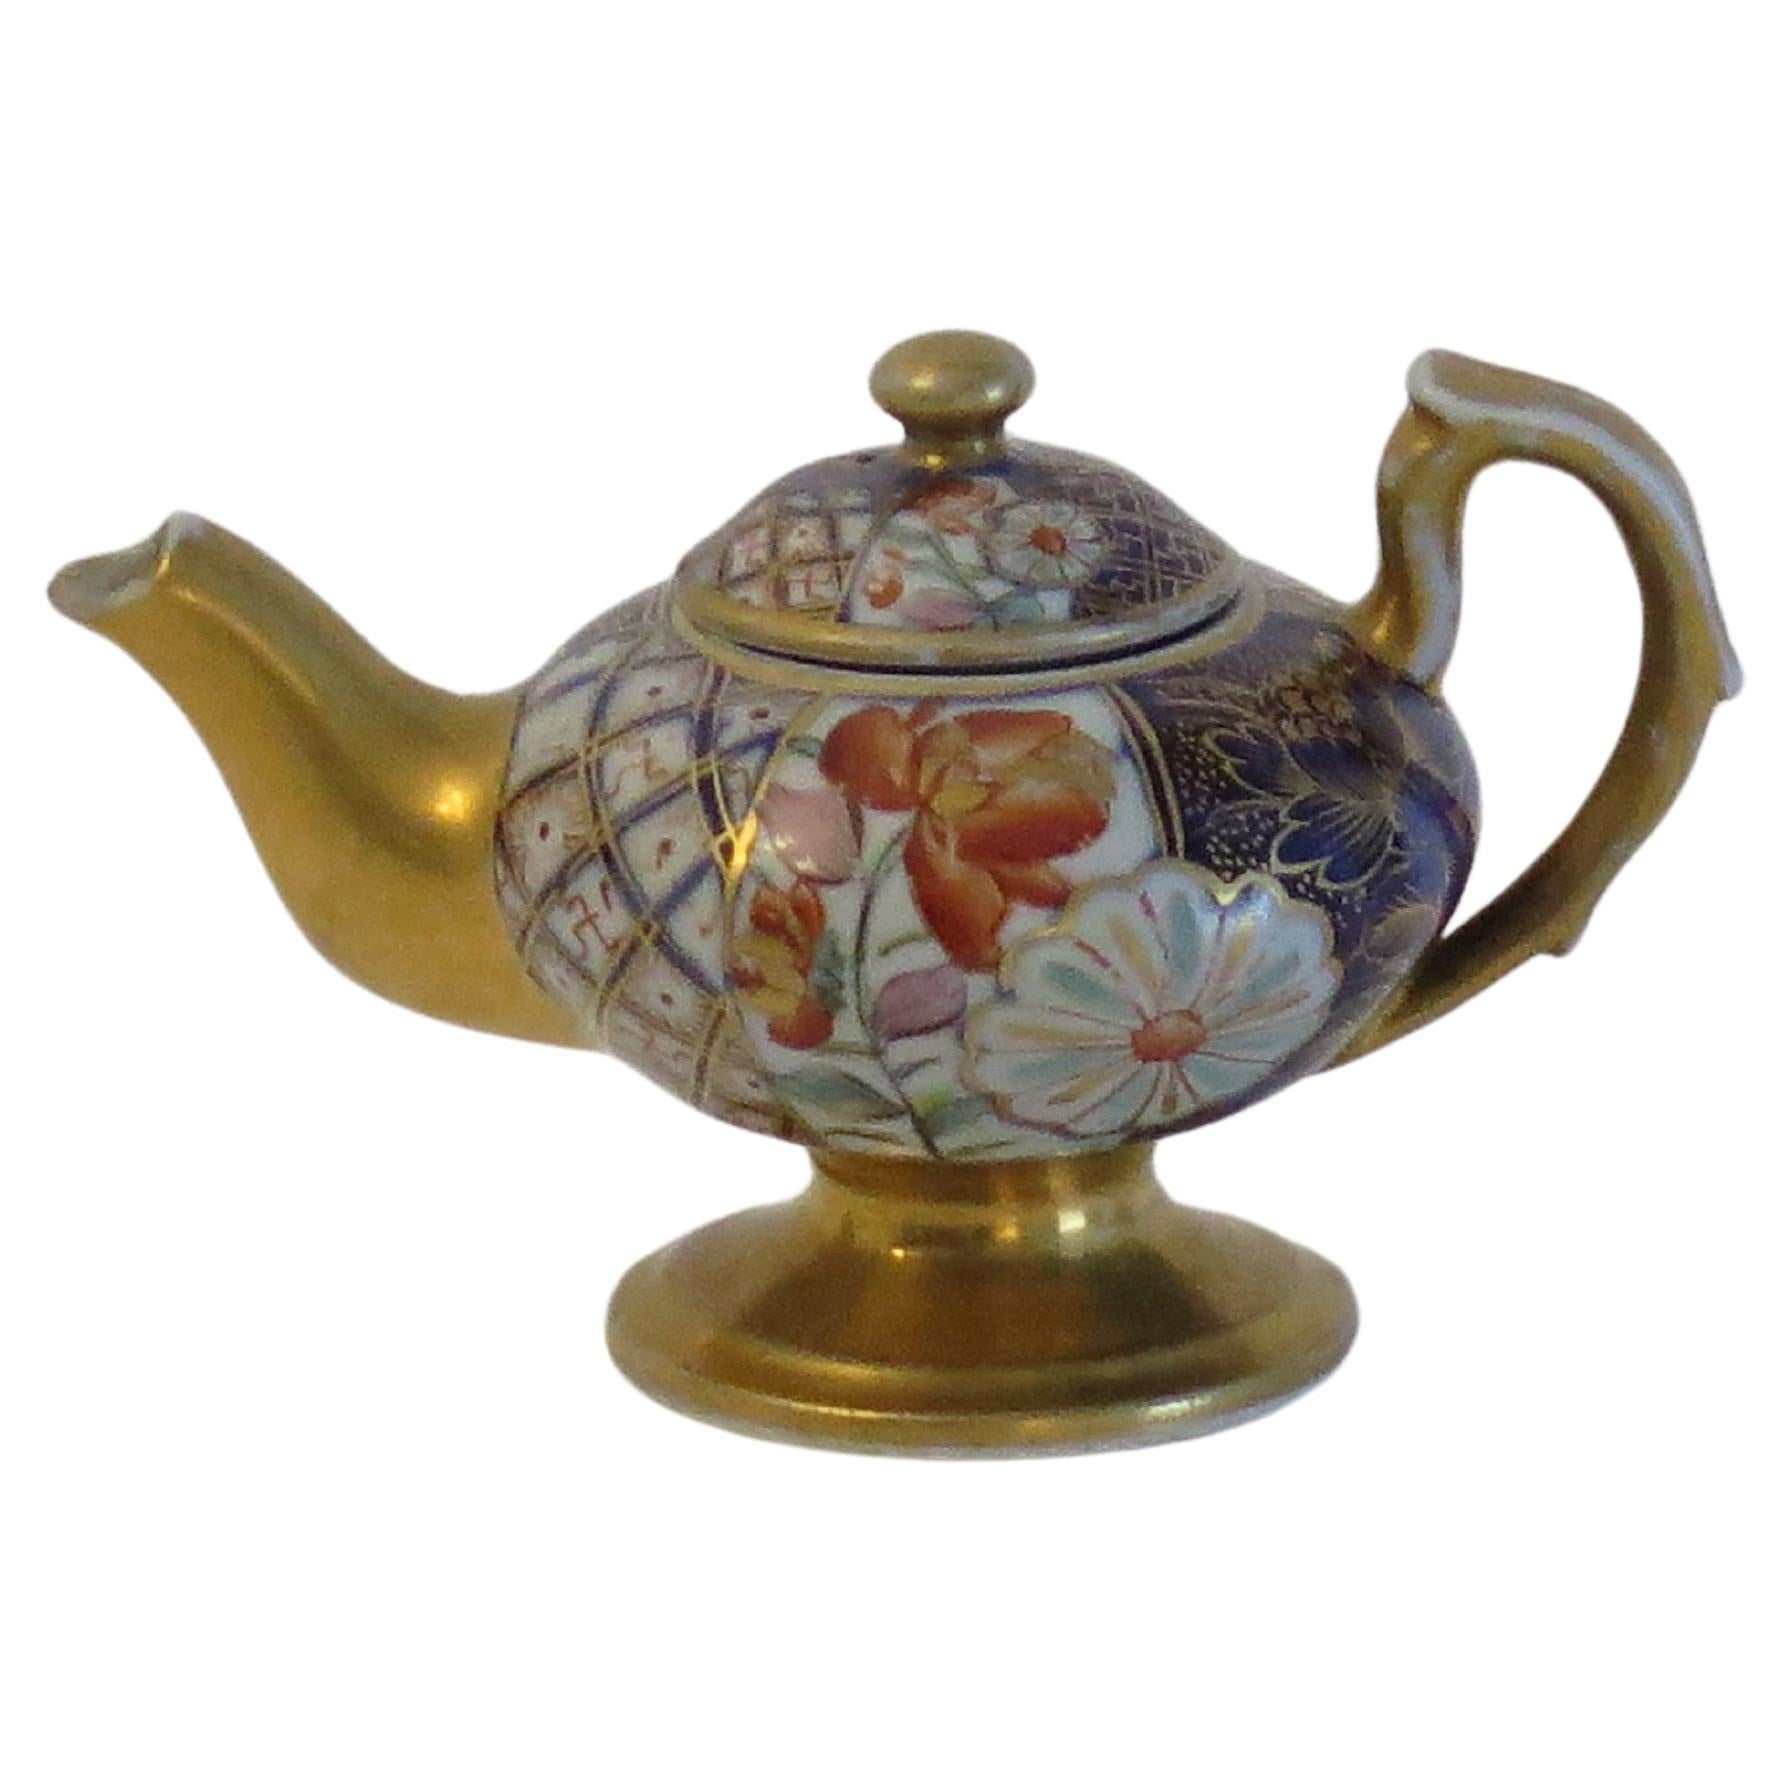 Rare Mason's Ironstone Miniature Teapot in Plaid Japan rare Pattern, circa 1820